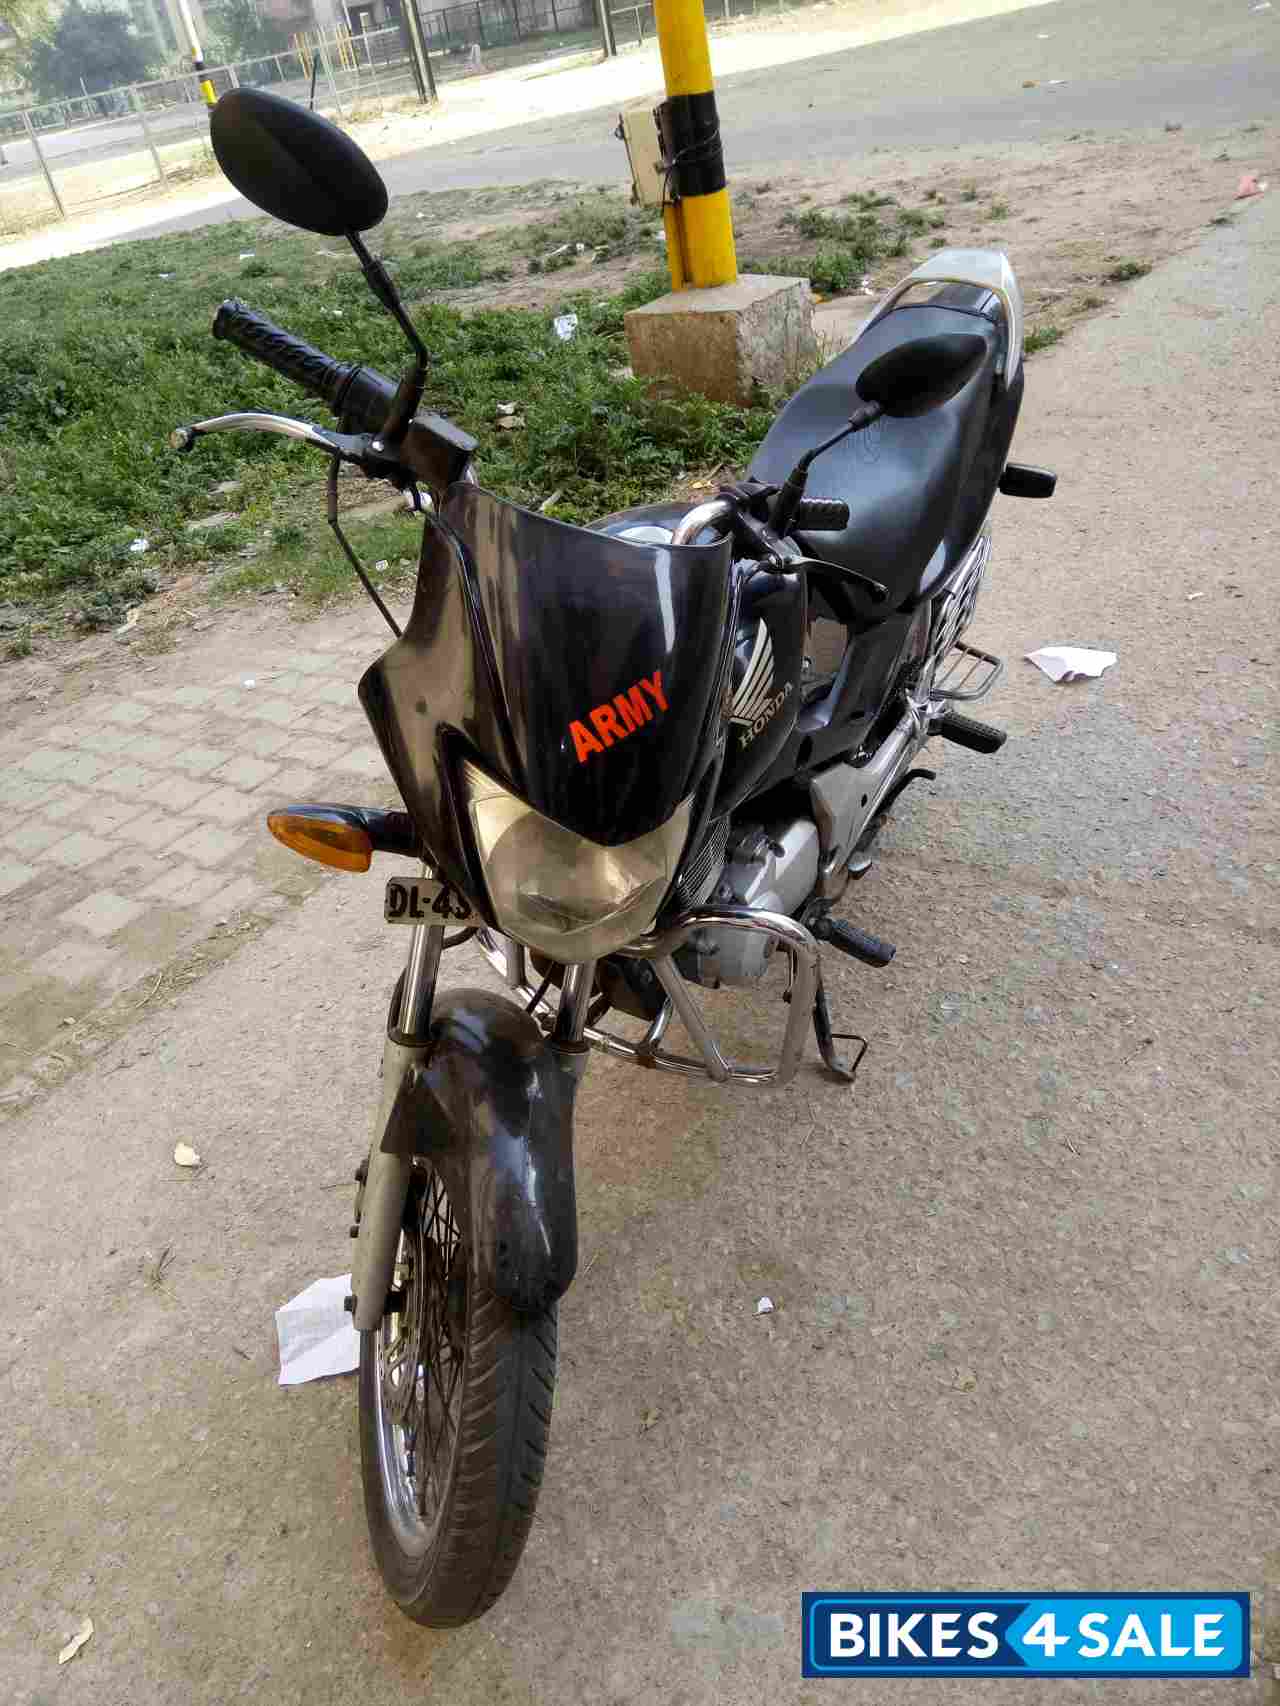 Used 2005 model Honda Unicorn for sale in New Delhi. ID 141936. Black